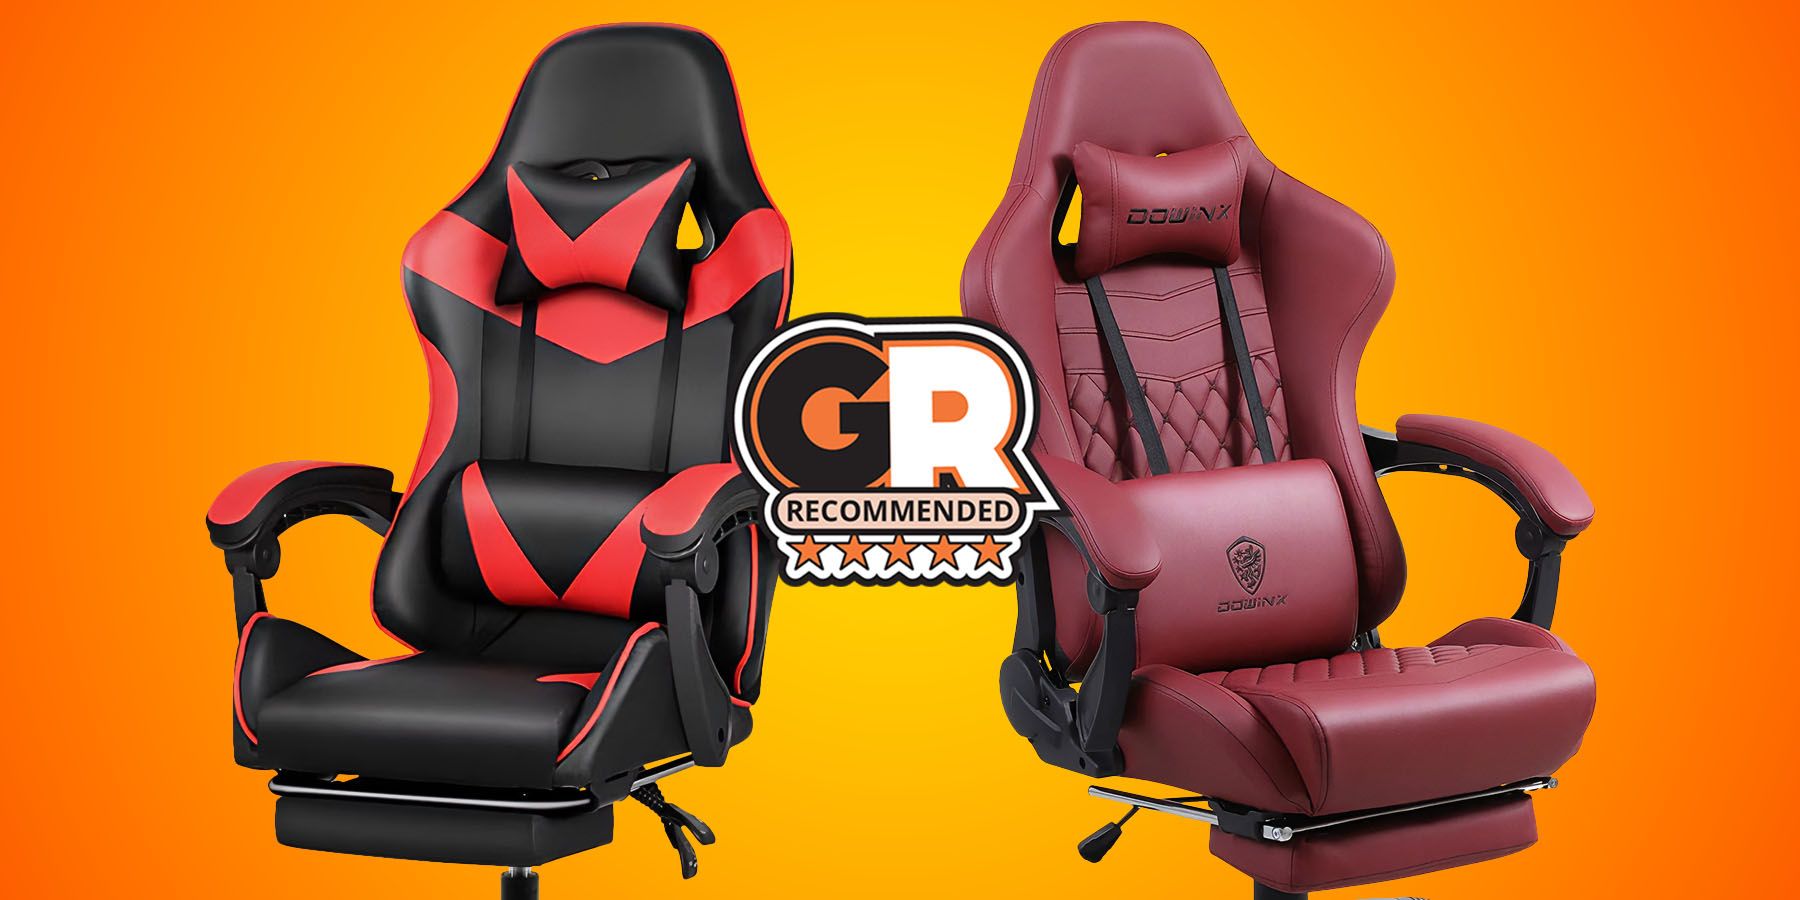 Newegg on X: Dowinx ergonomic gaming chair with massage, recline